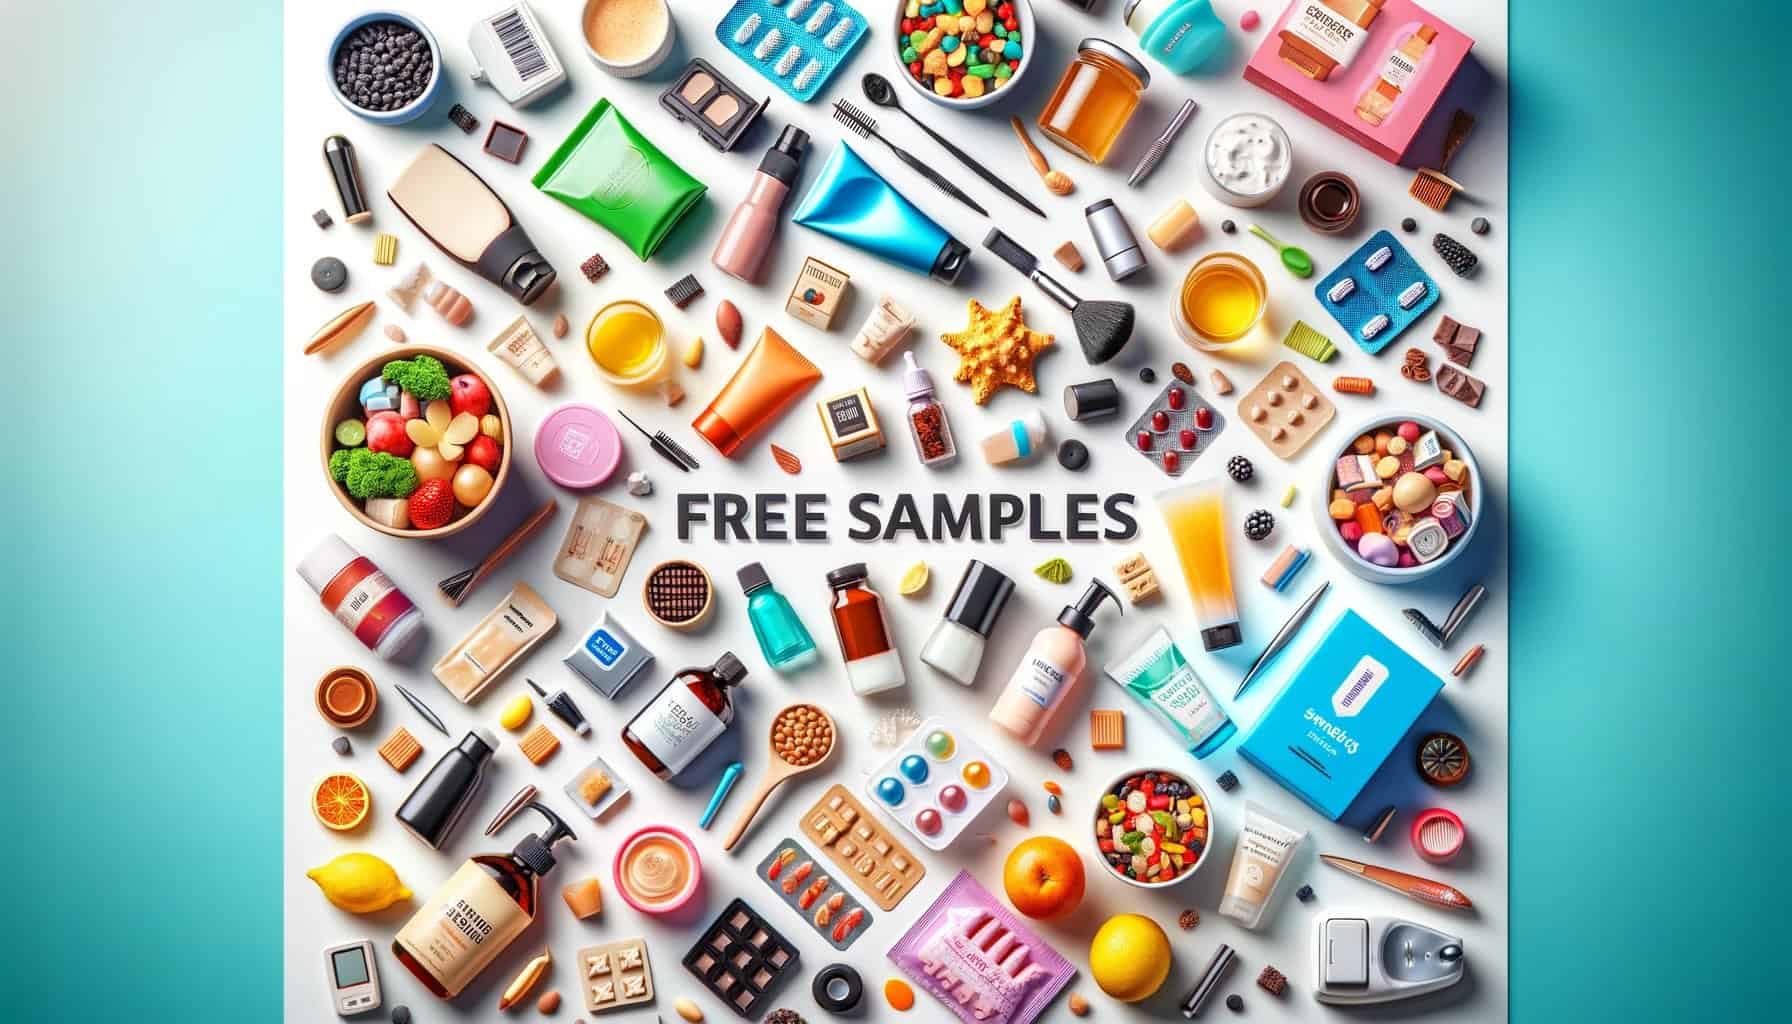 Freebie product samples